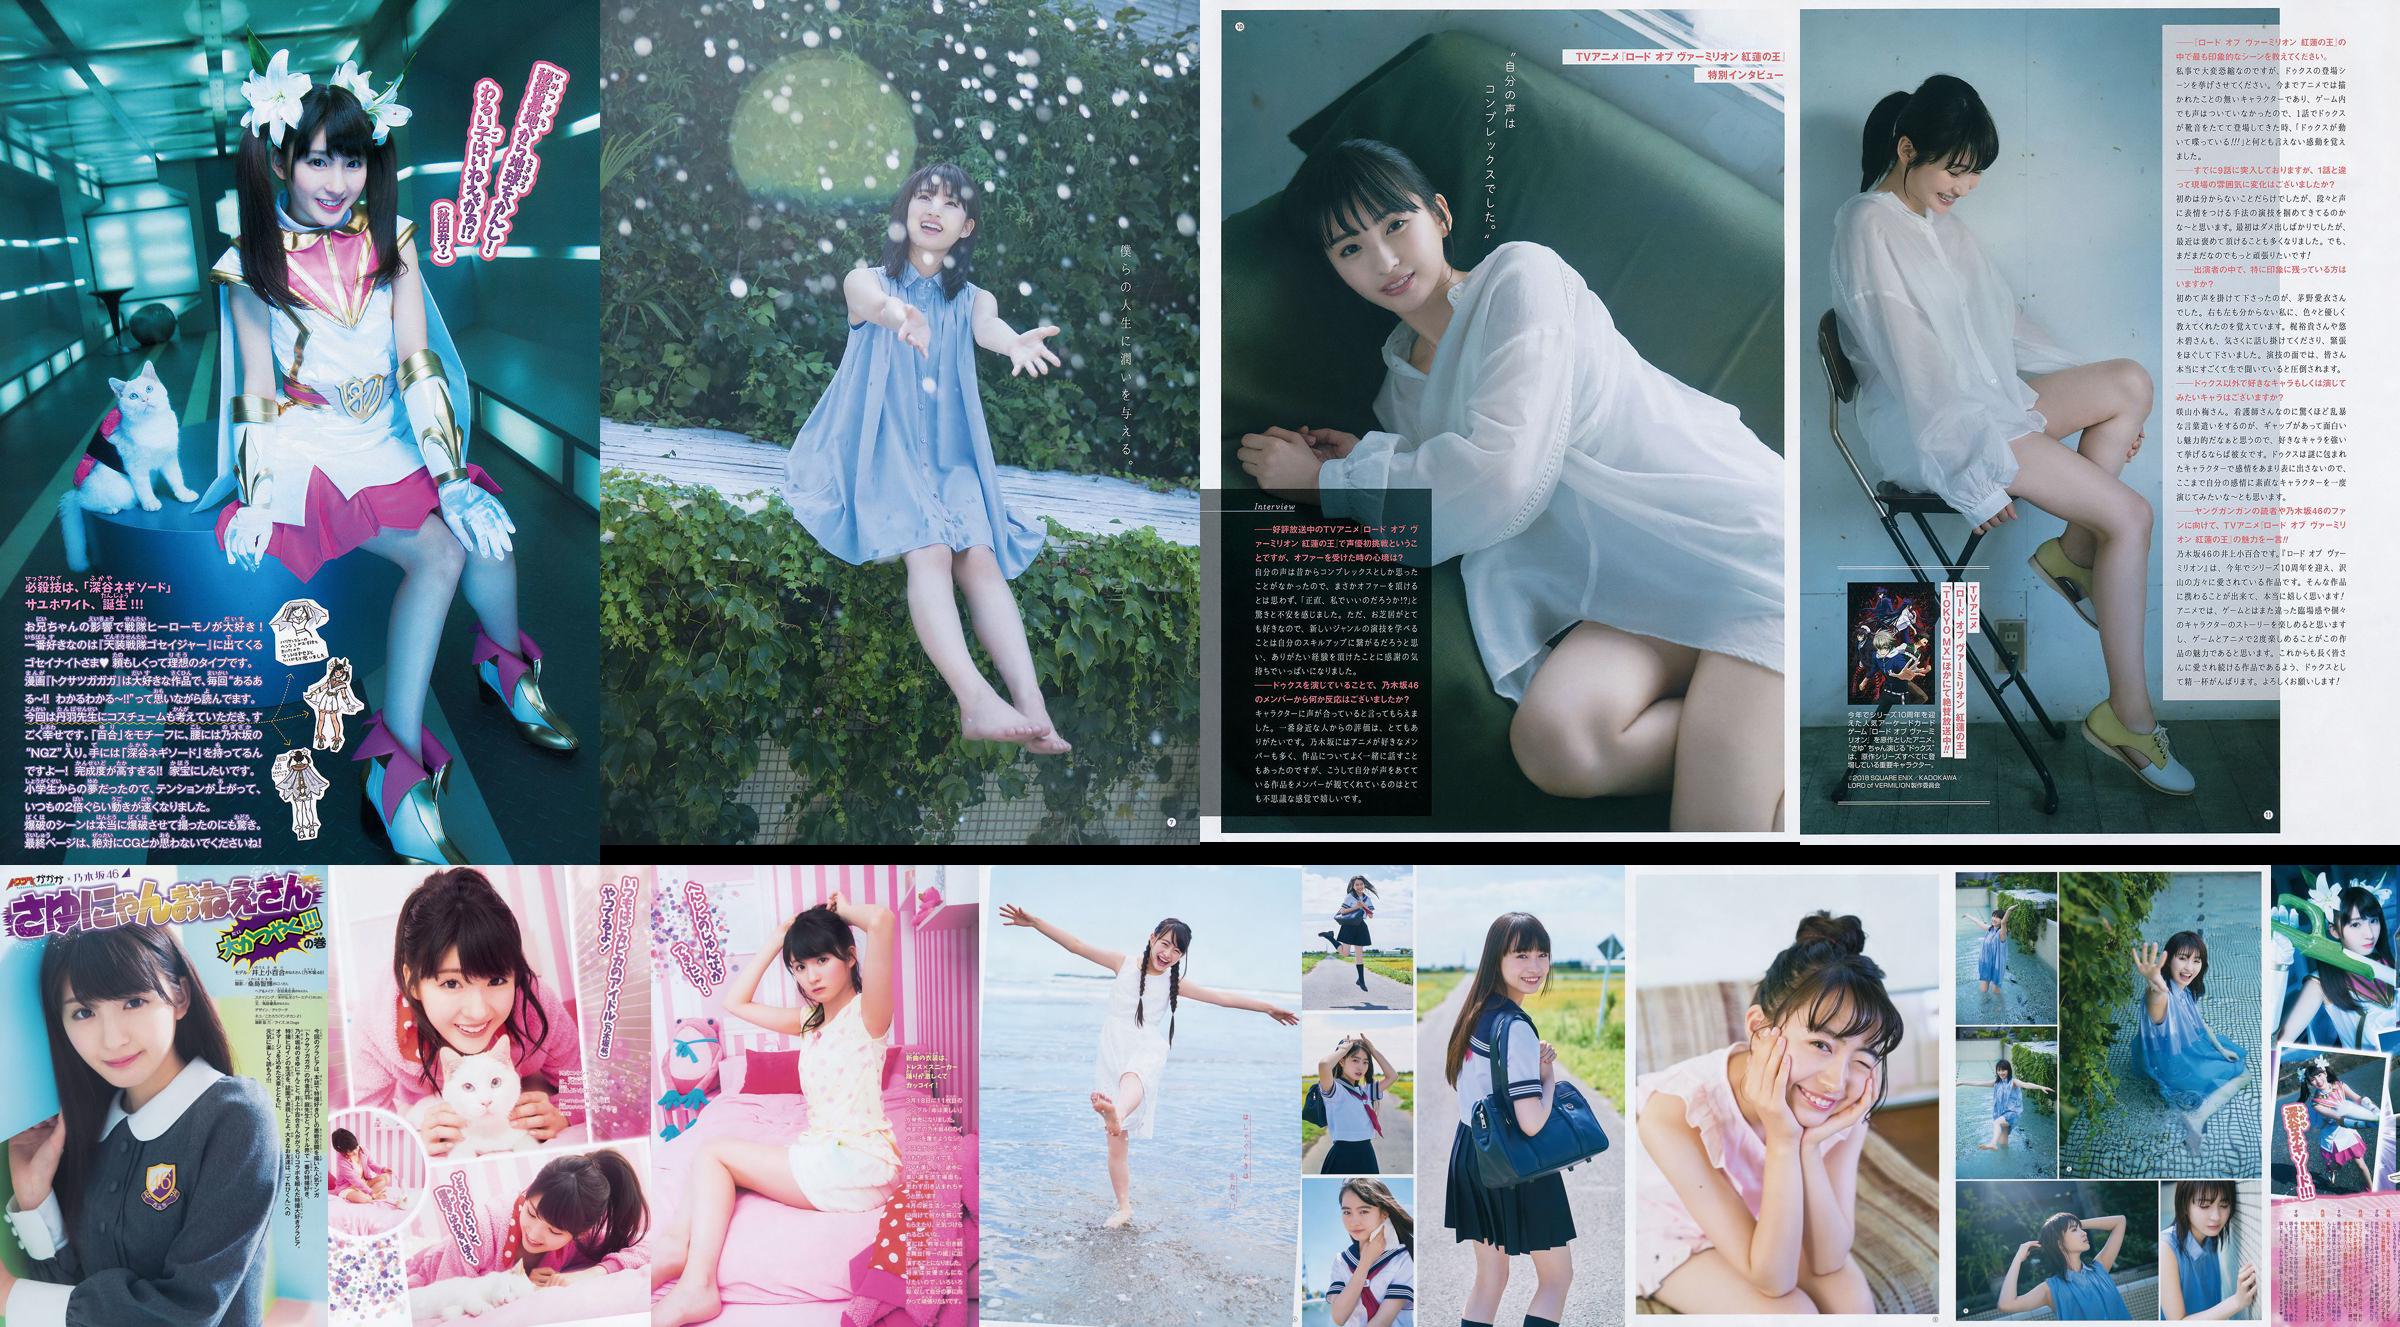 [Young Gangan] Sayuri Inoue Son sable d'origine 2018 Magazine photo n ° 18 No.06a9b6 Page 4